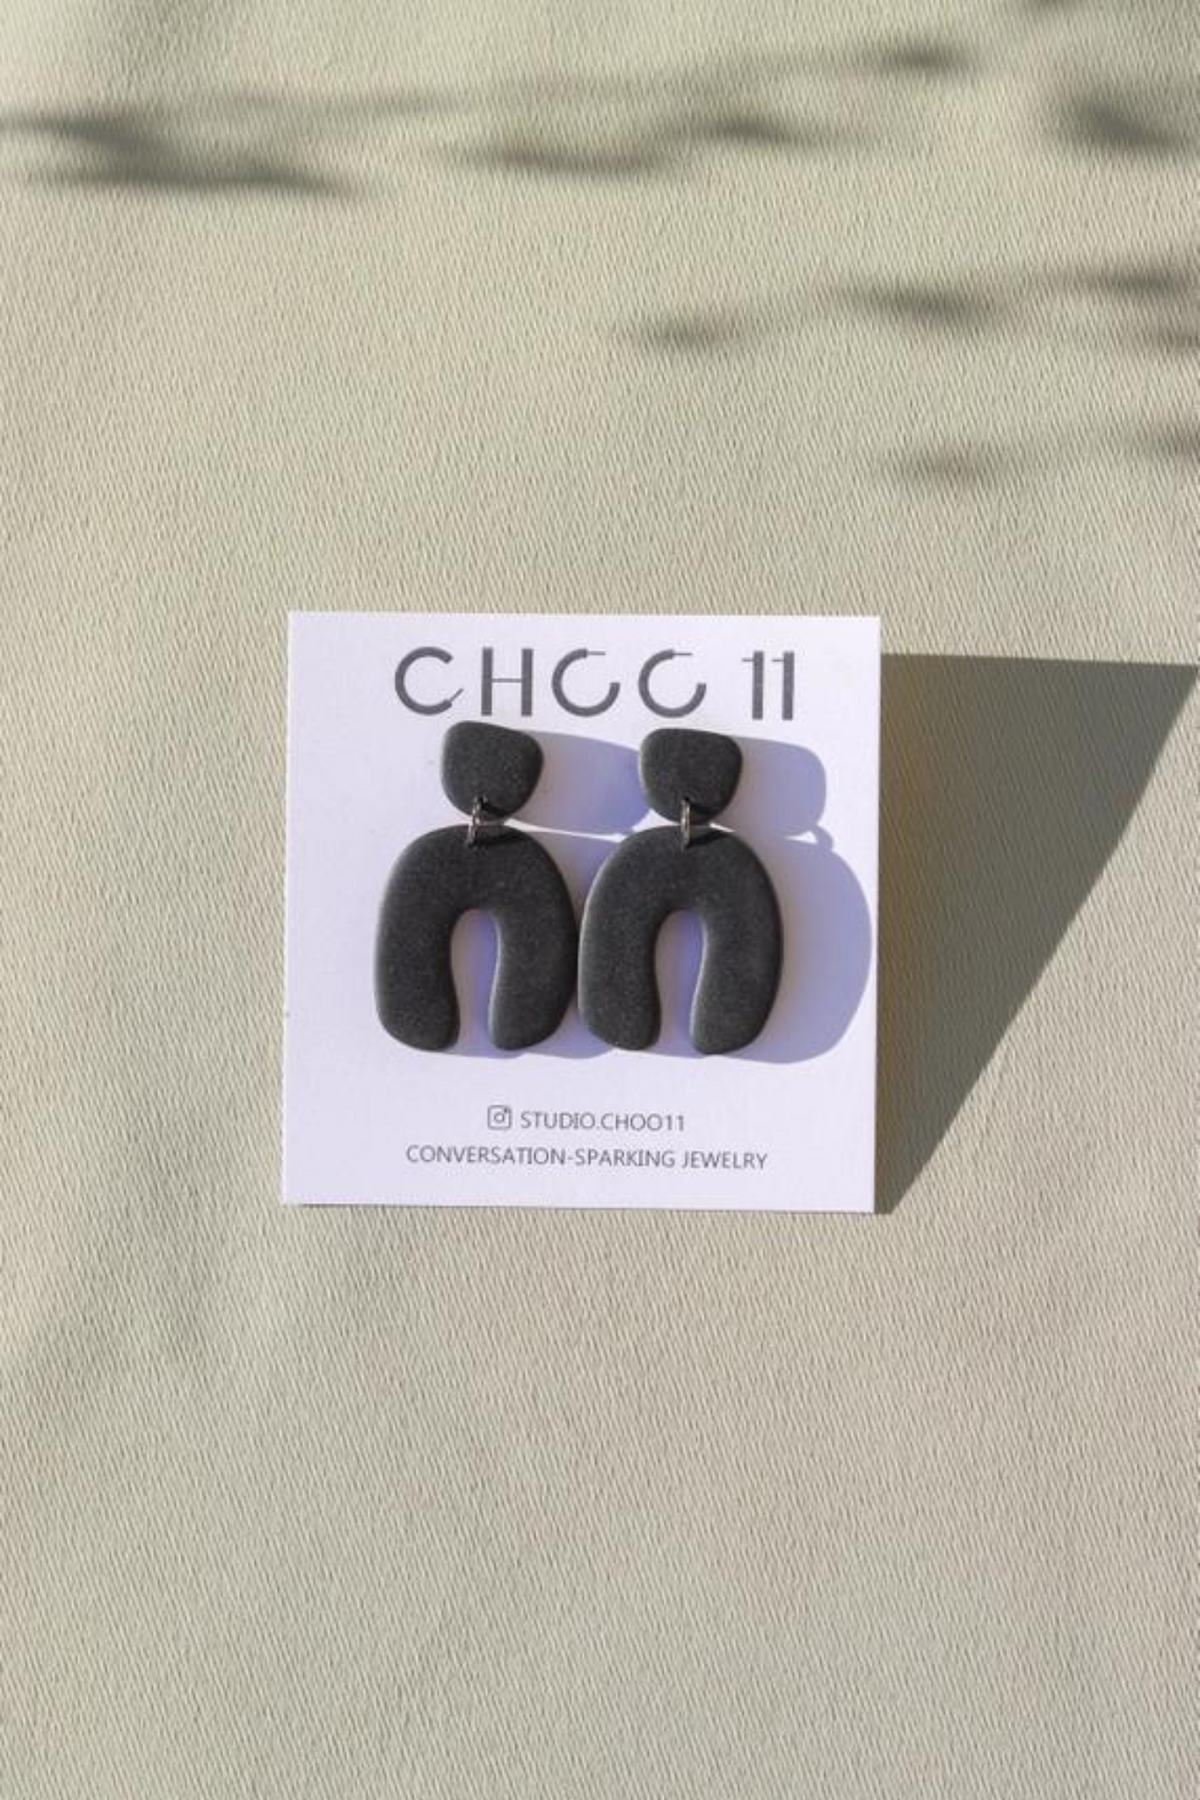 Studio Choo 11 Diana Earrings